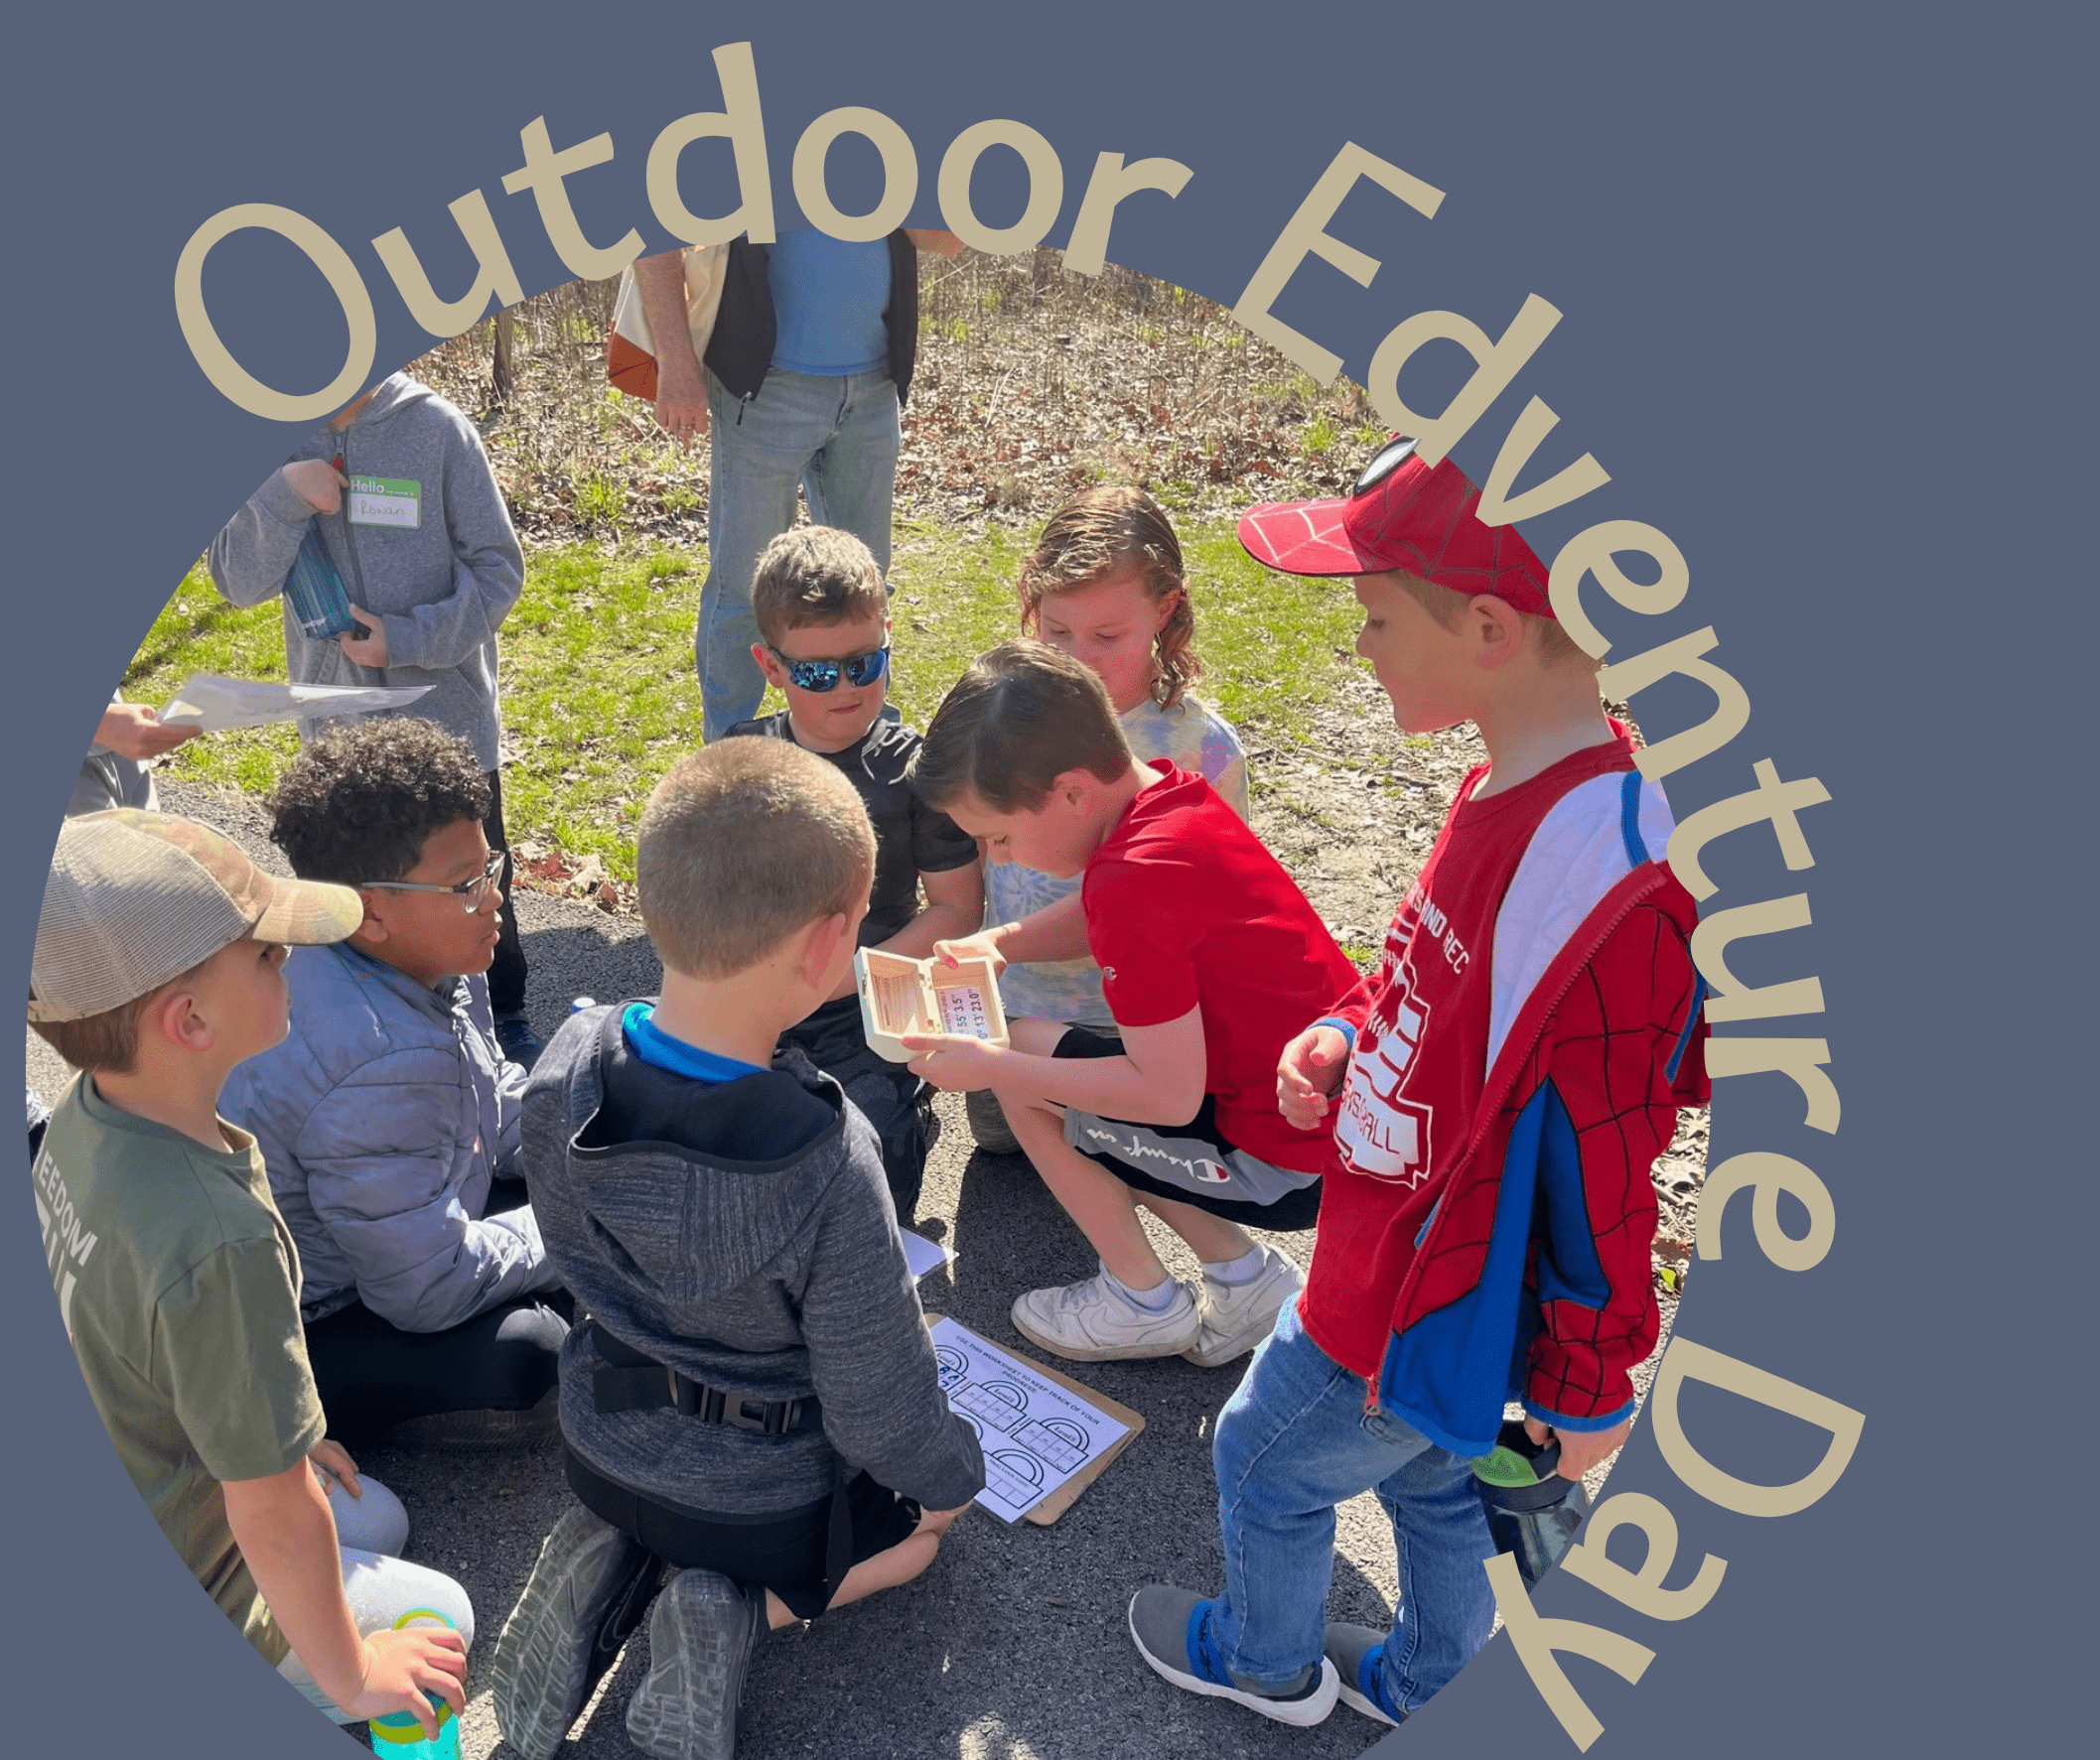 Outdoor Edventure Day: April Fools Day Fun!